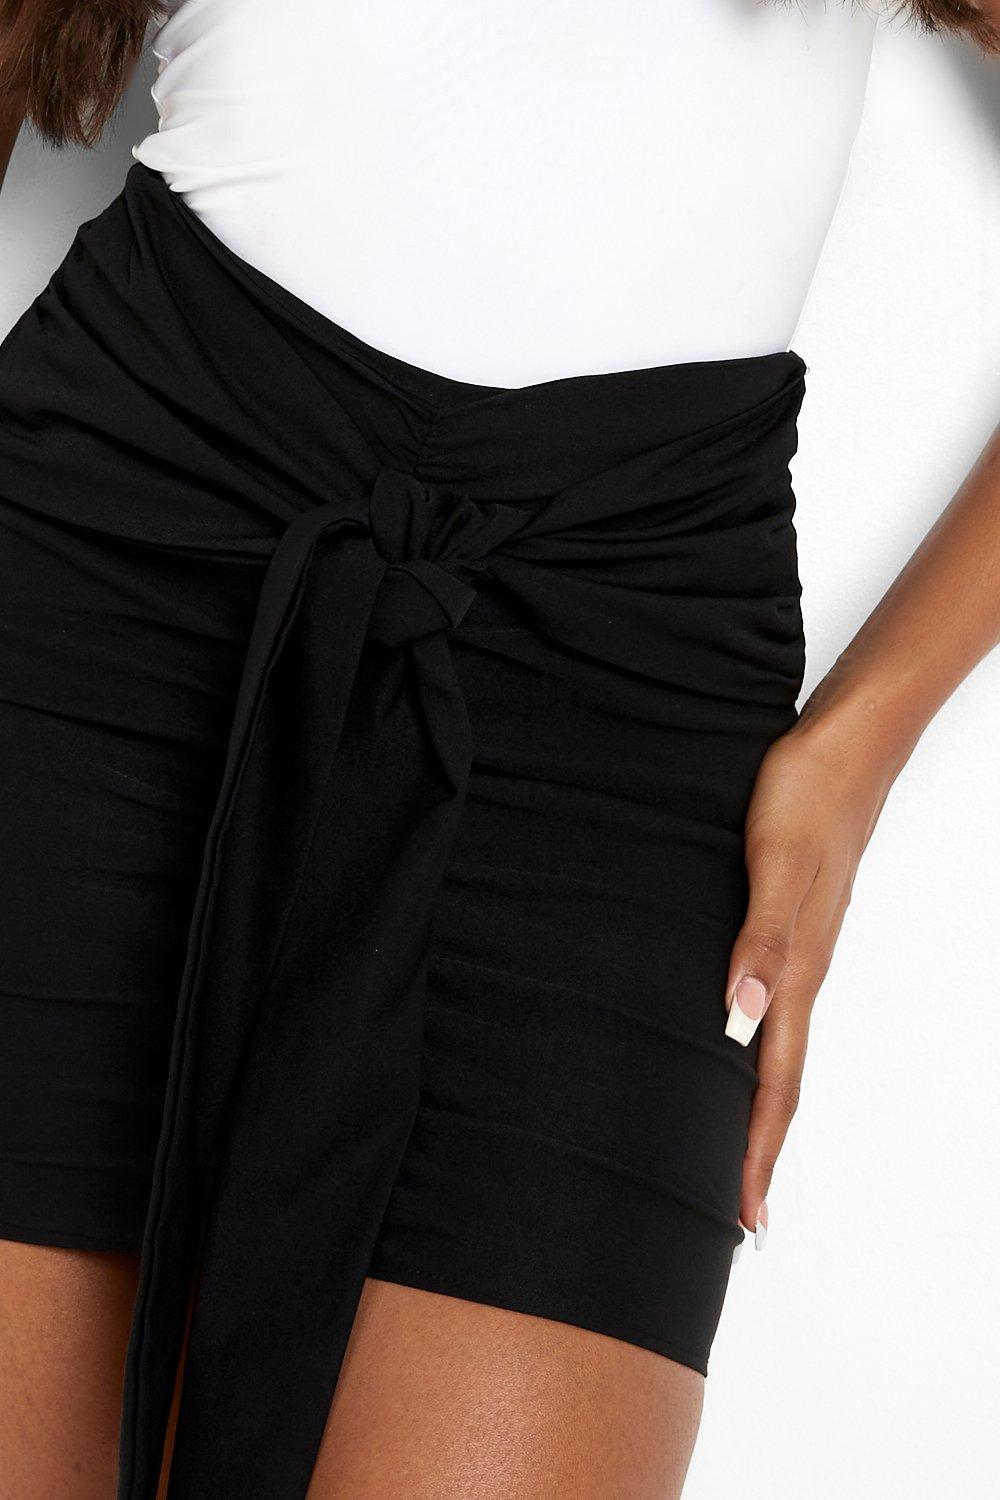 https://media.boohoo.com/i/boohoo/fzz31494_black_xl_3/female-black-v-waist-stretch-woven-tie-mini-skirt